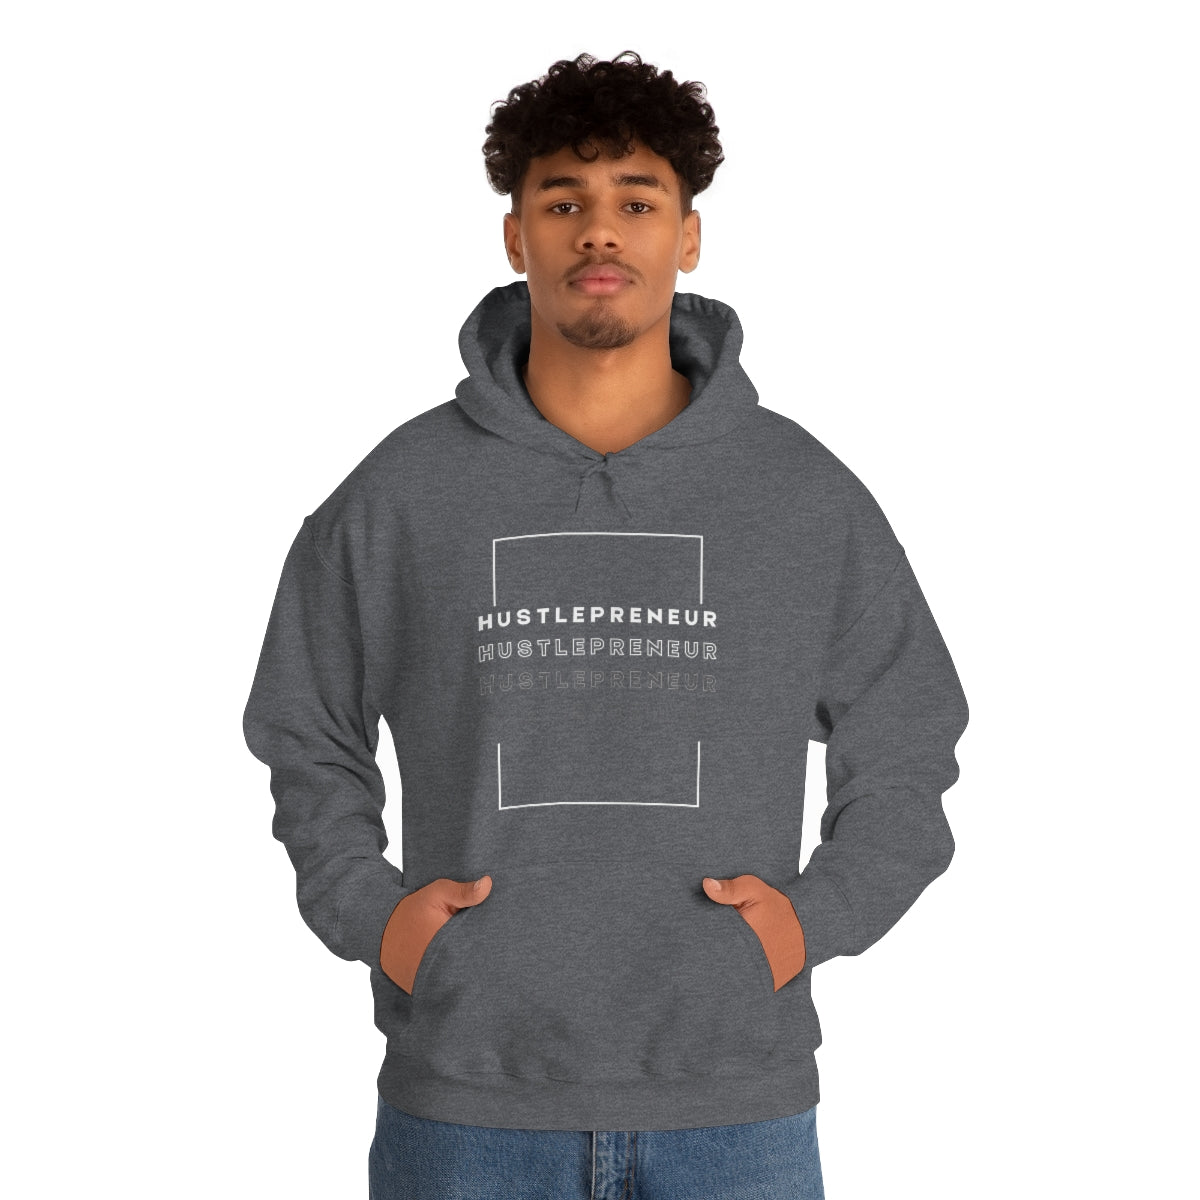 "Hustlepreneur" Unisex Hooded Sweatshirt